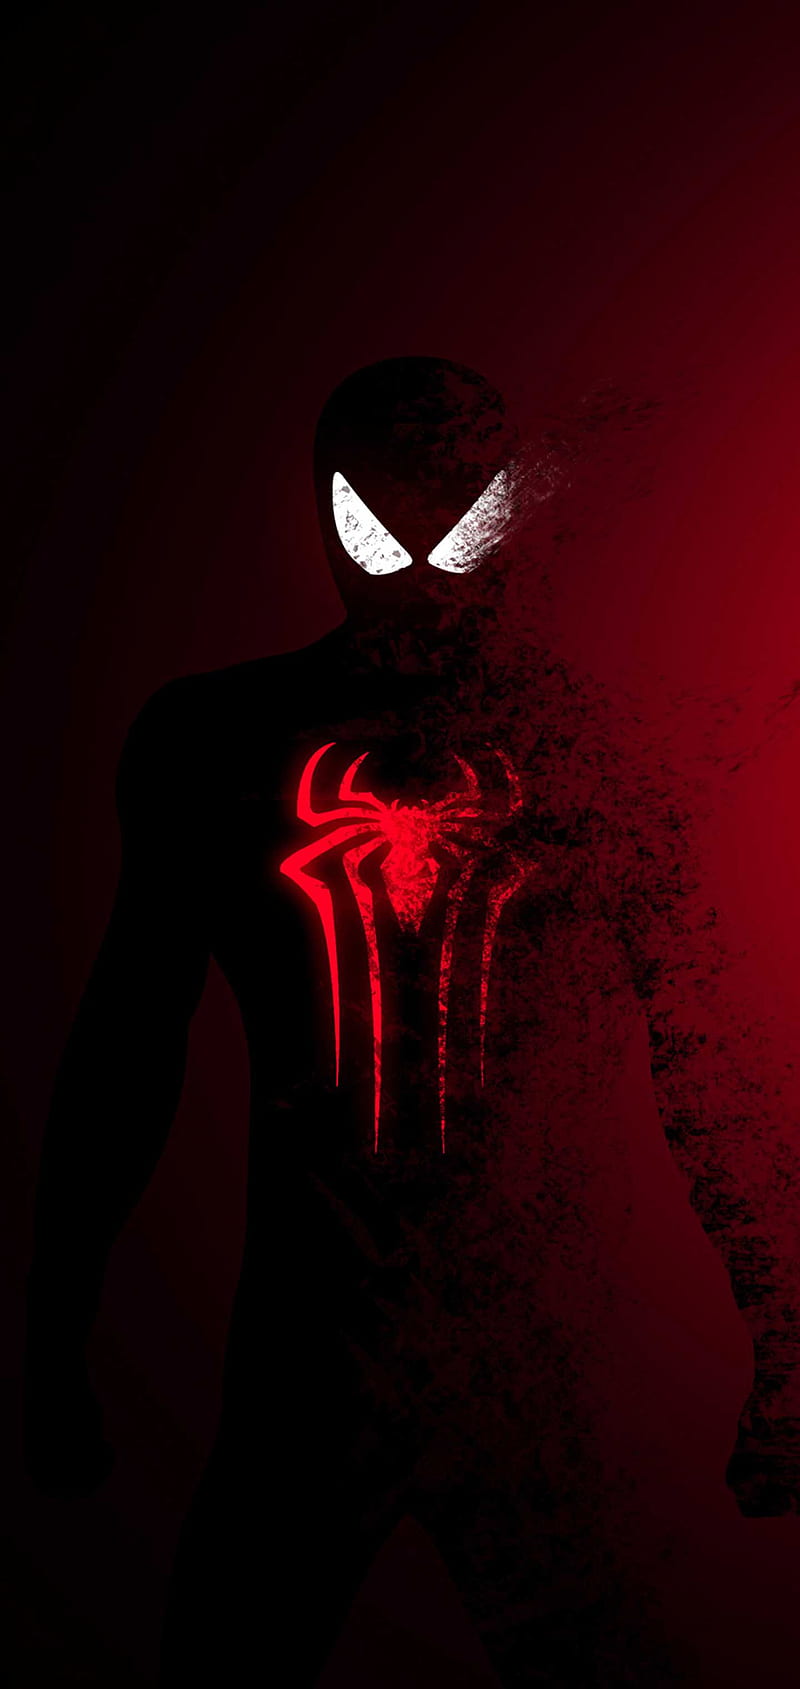 Spider-Man vs Venom 4K Wallpaper for iPhone